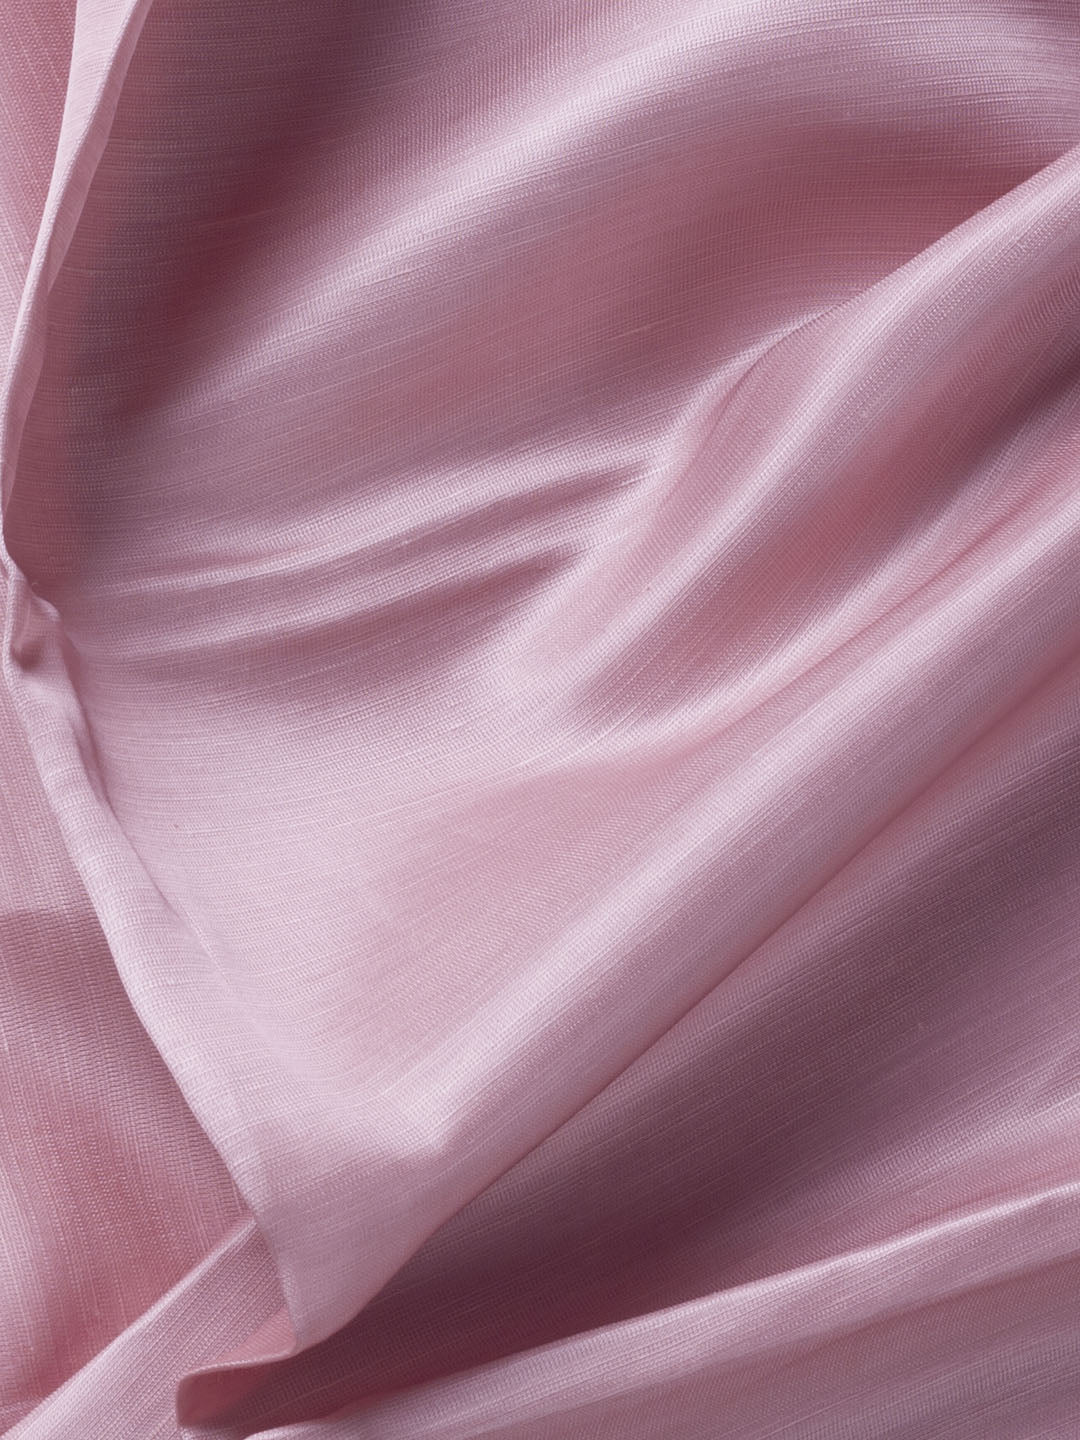 Pretty Baby Pink Linen Satin Fabric